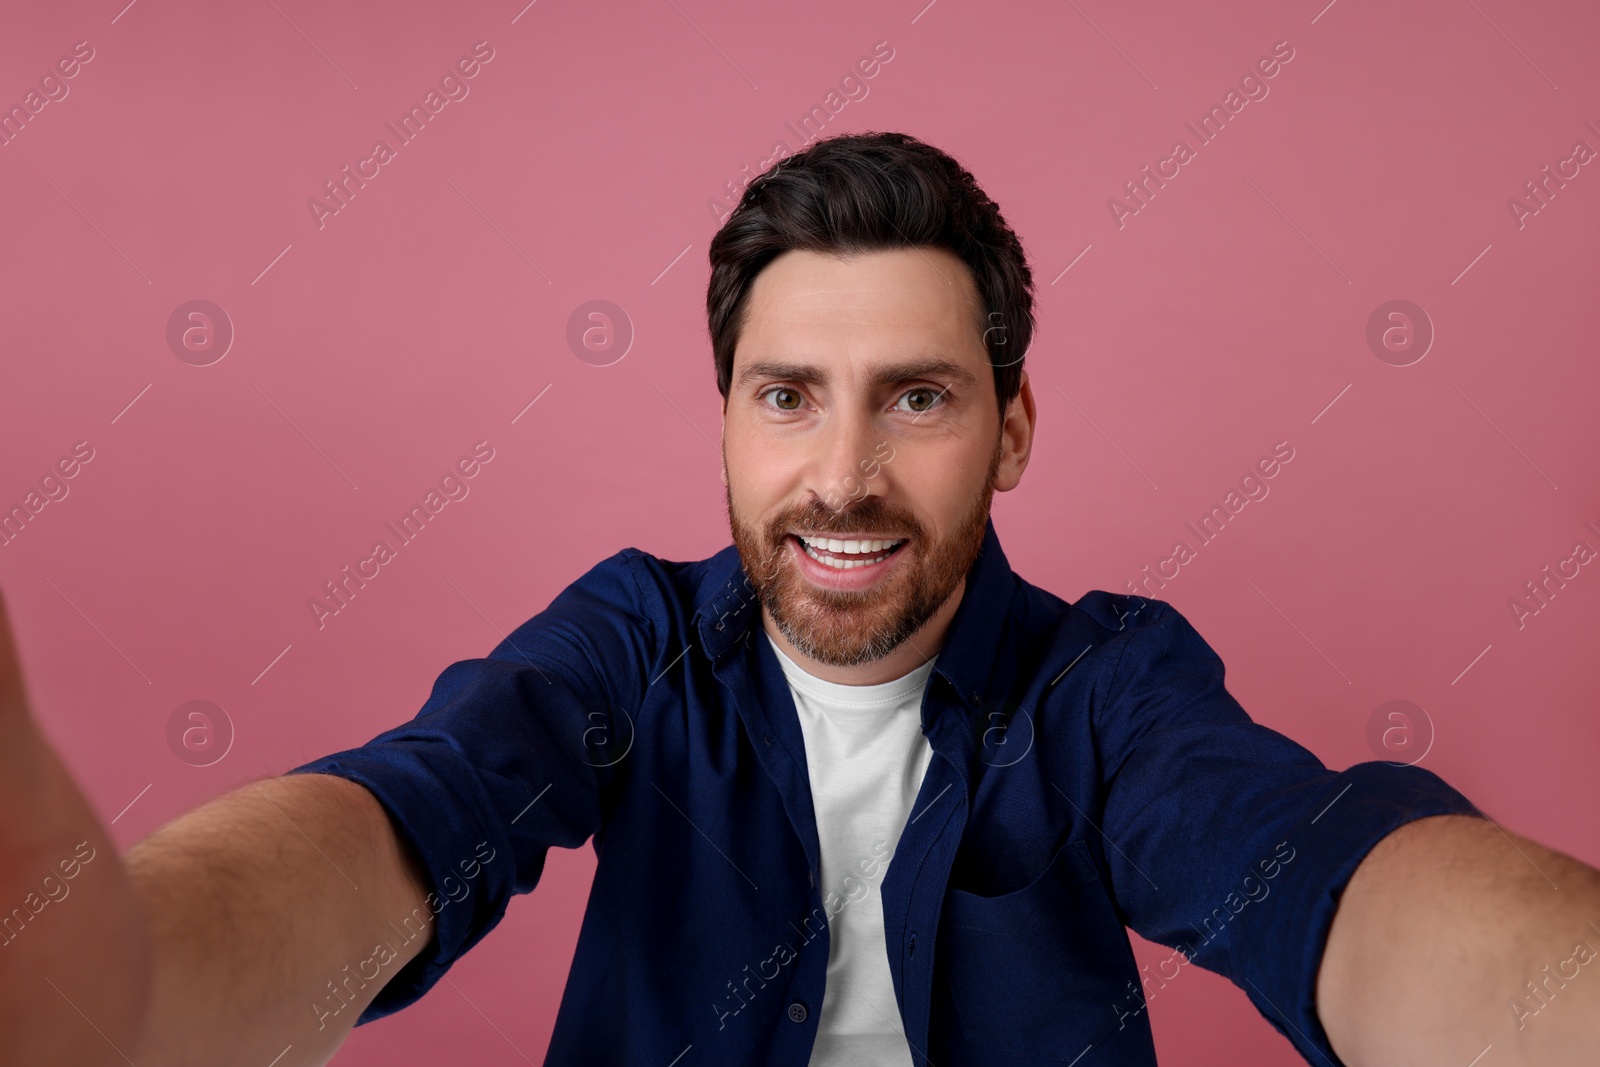 Photo of Smiling man taking selfie on pink background